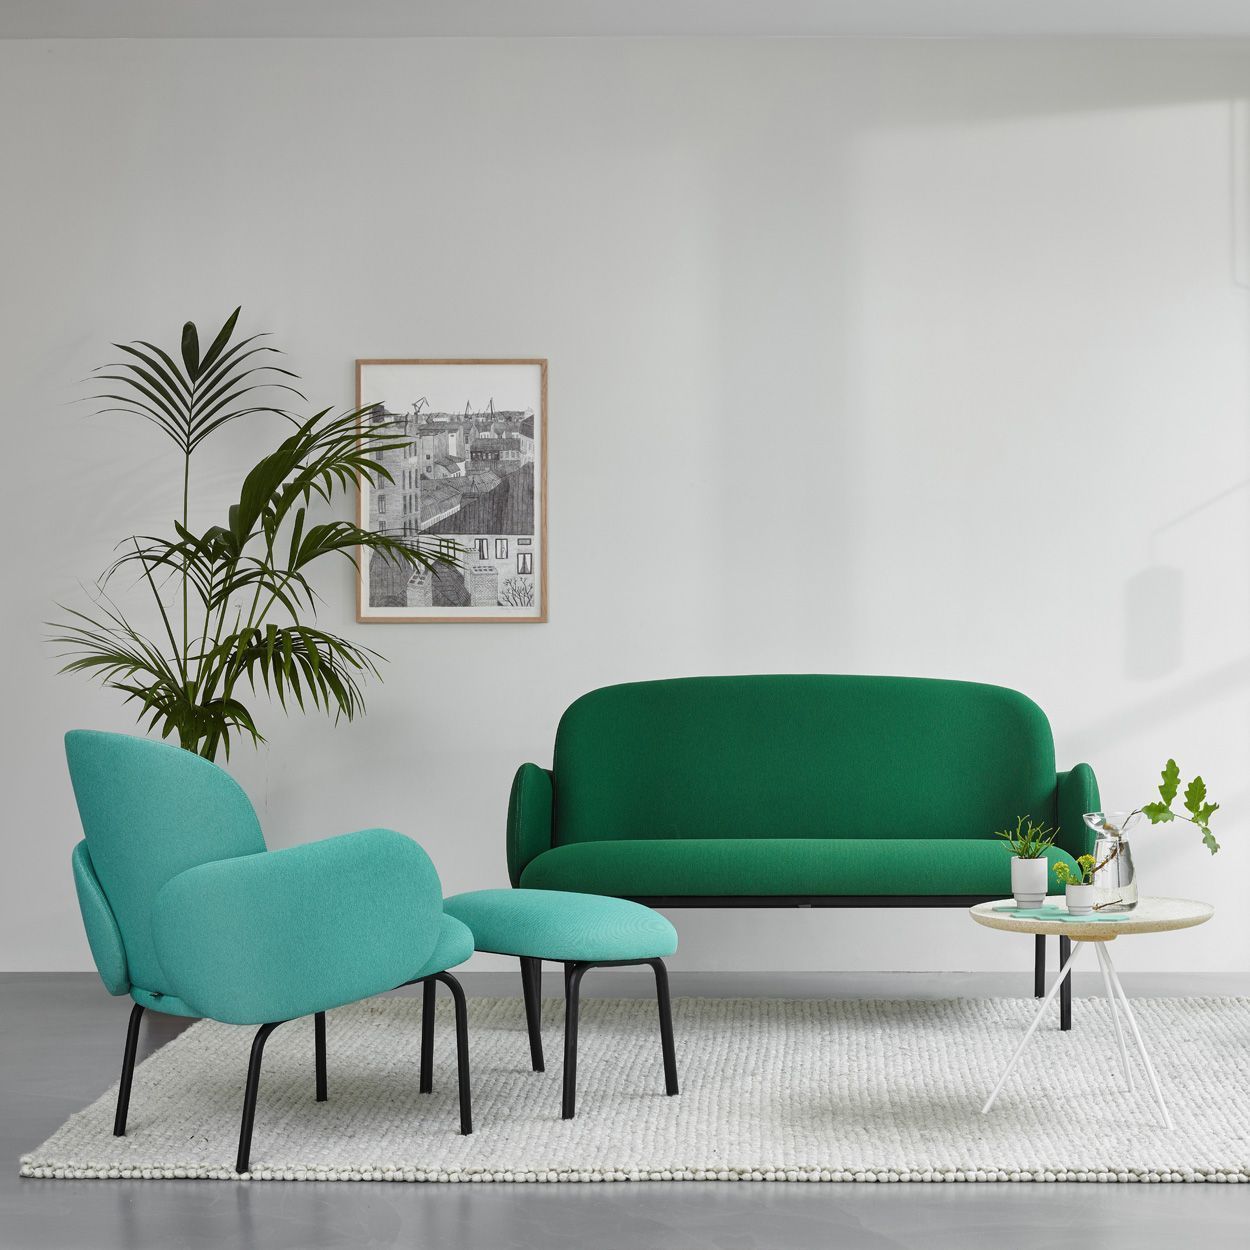 Puik dost sofa stål, mørkegrøn